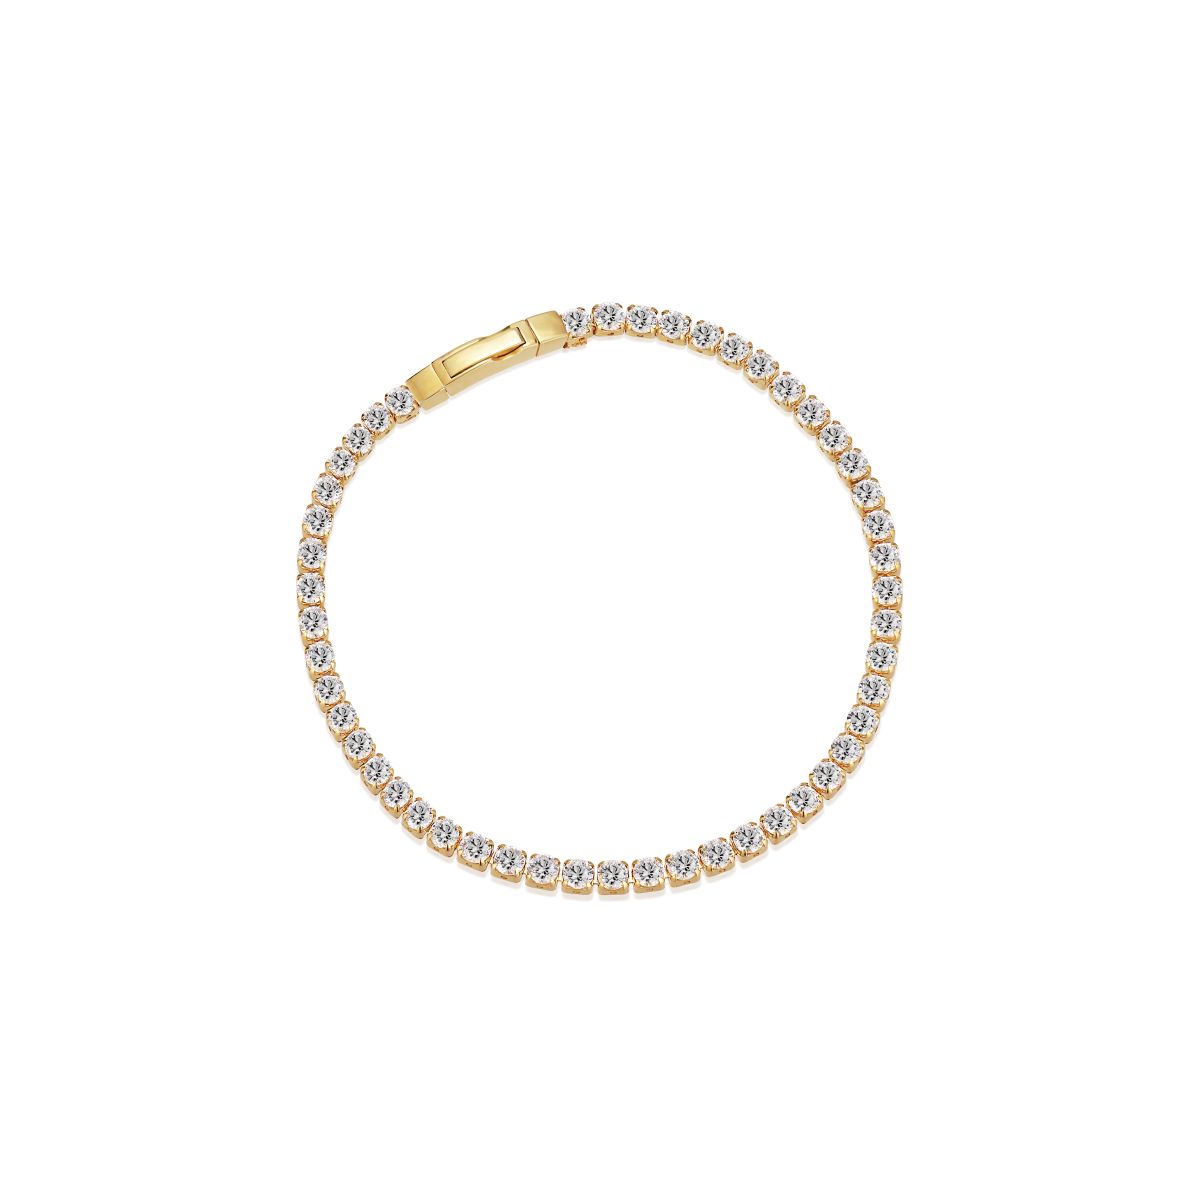 Sif Jakobs Ellera Grande Bracelet 18k Gold Plated with White Zirconia - SJ-B2870-CZ-YG-17